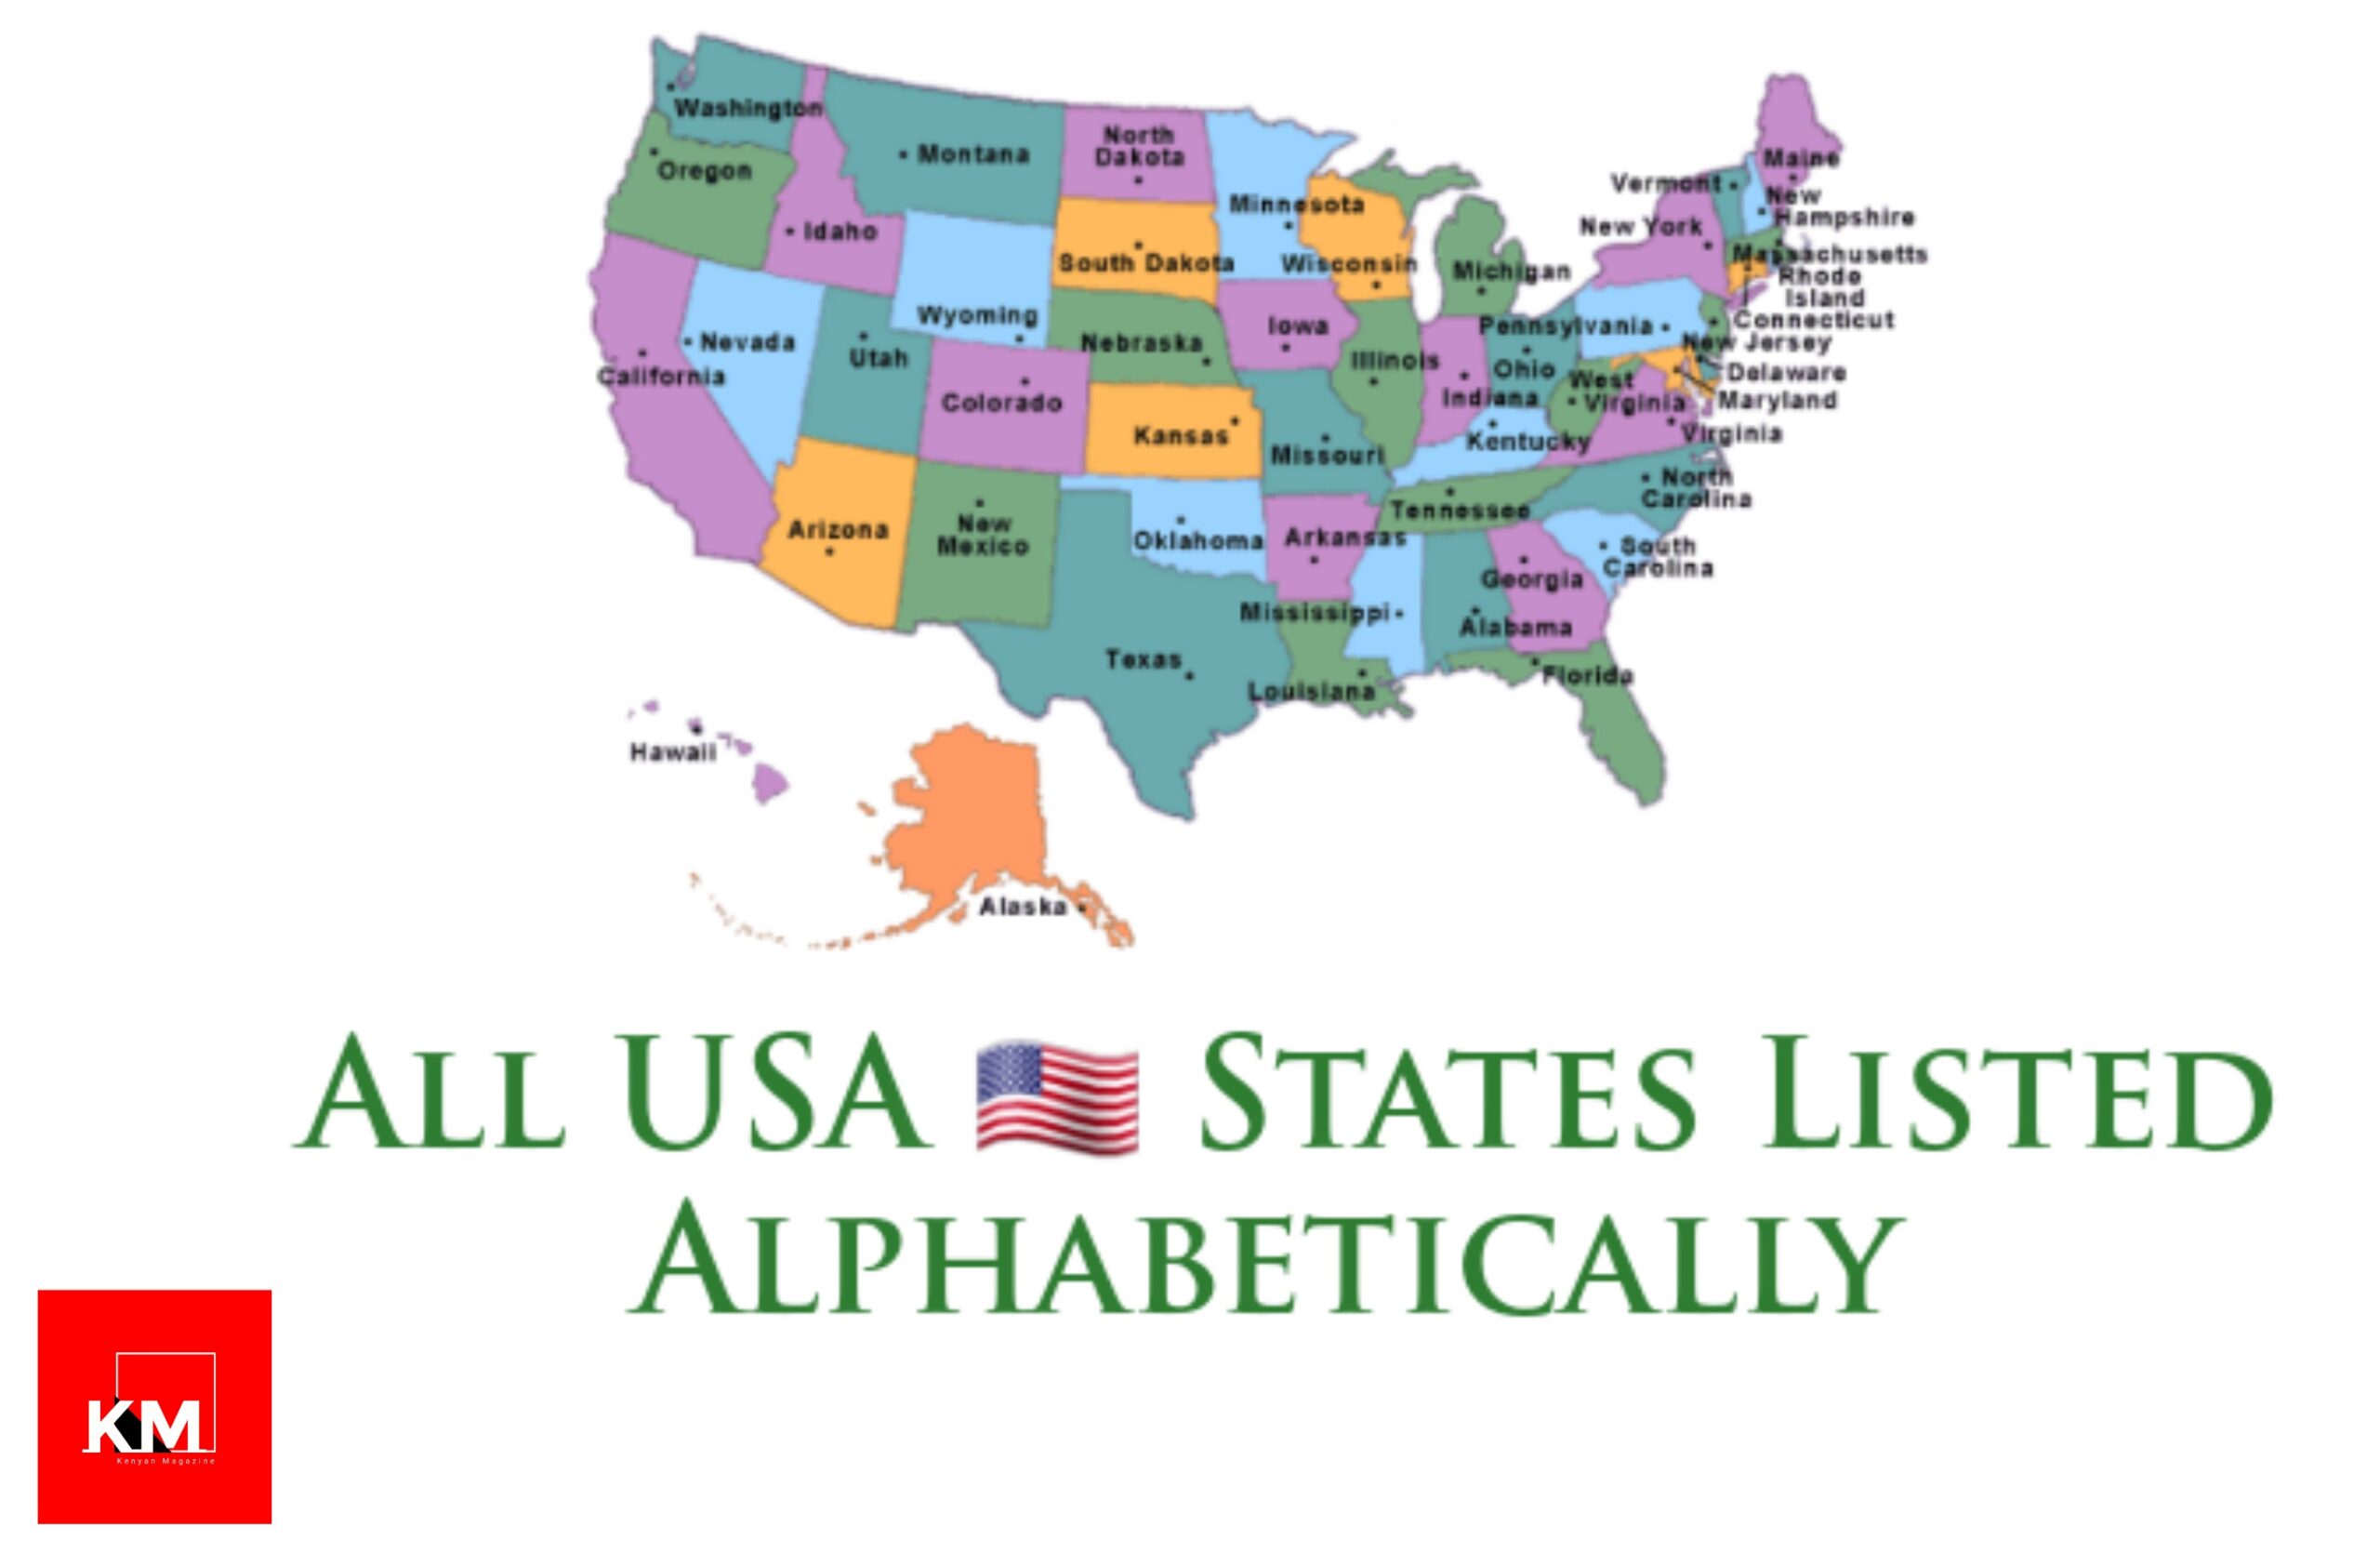 USA States, Capital listed Alphabetically